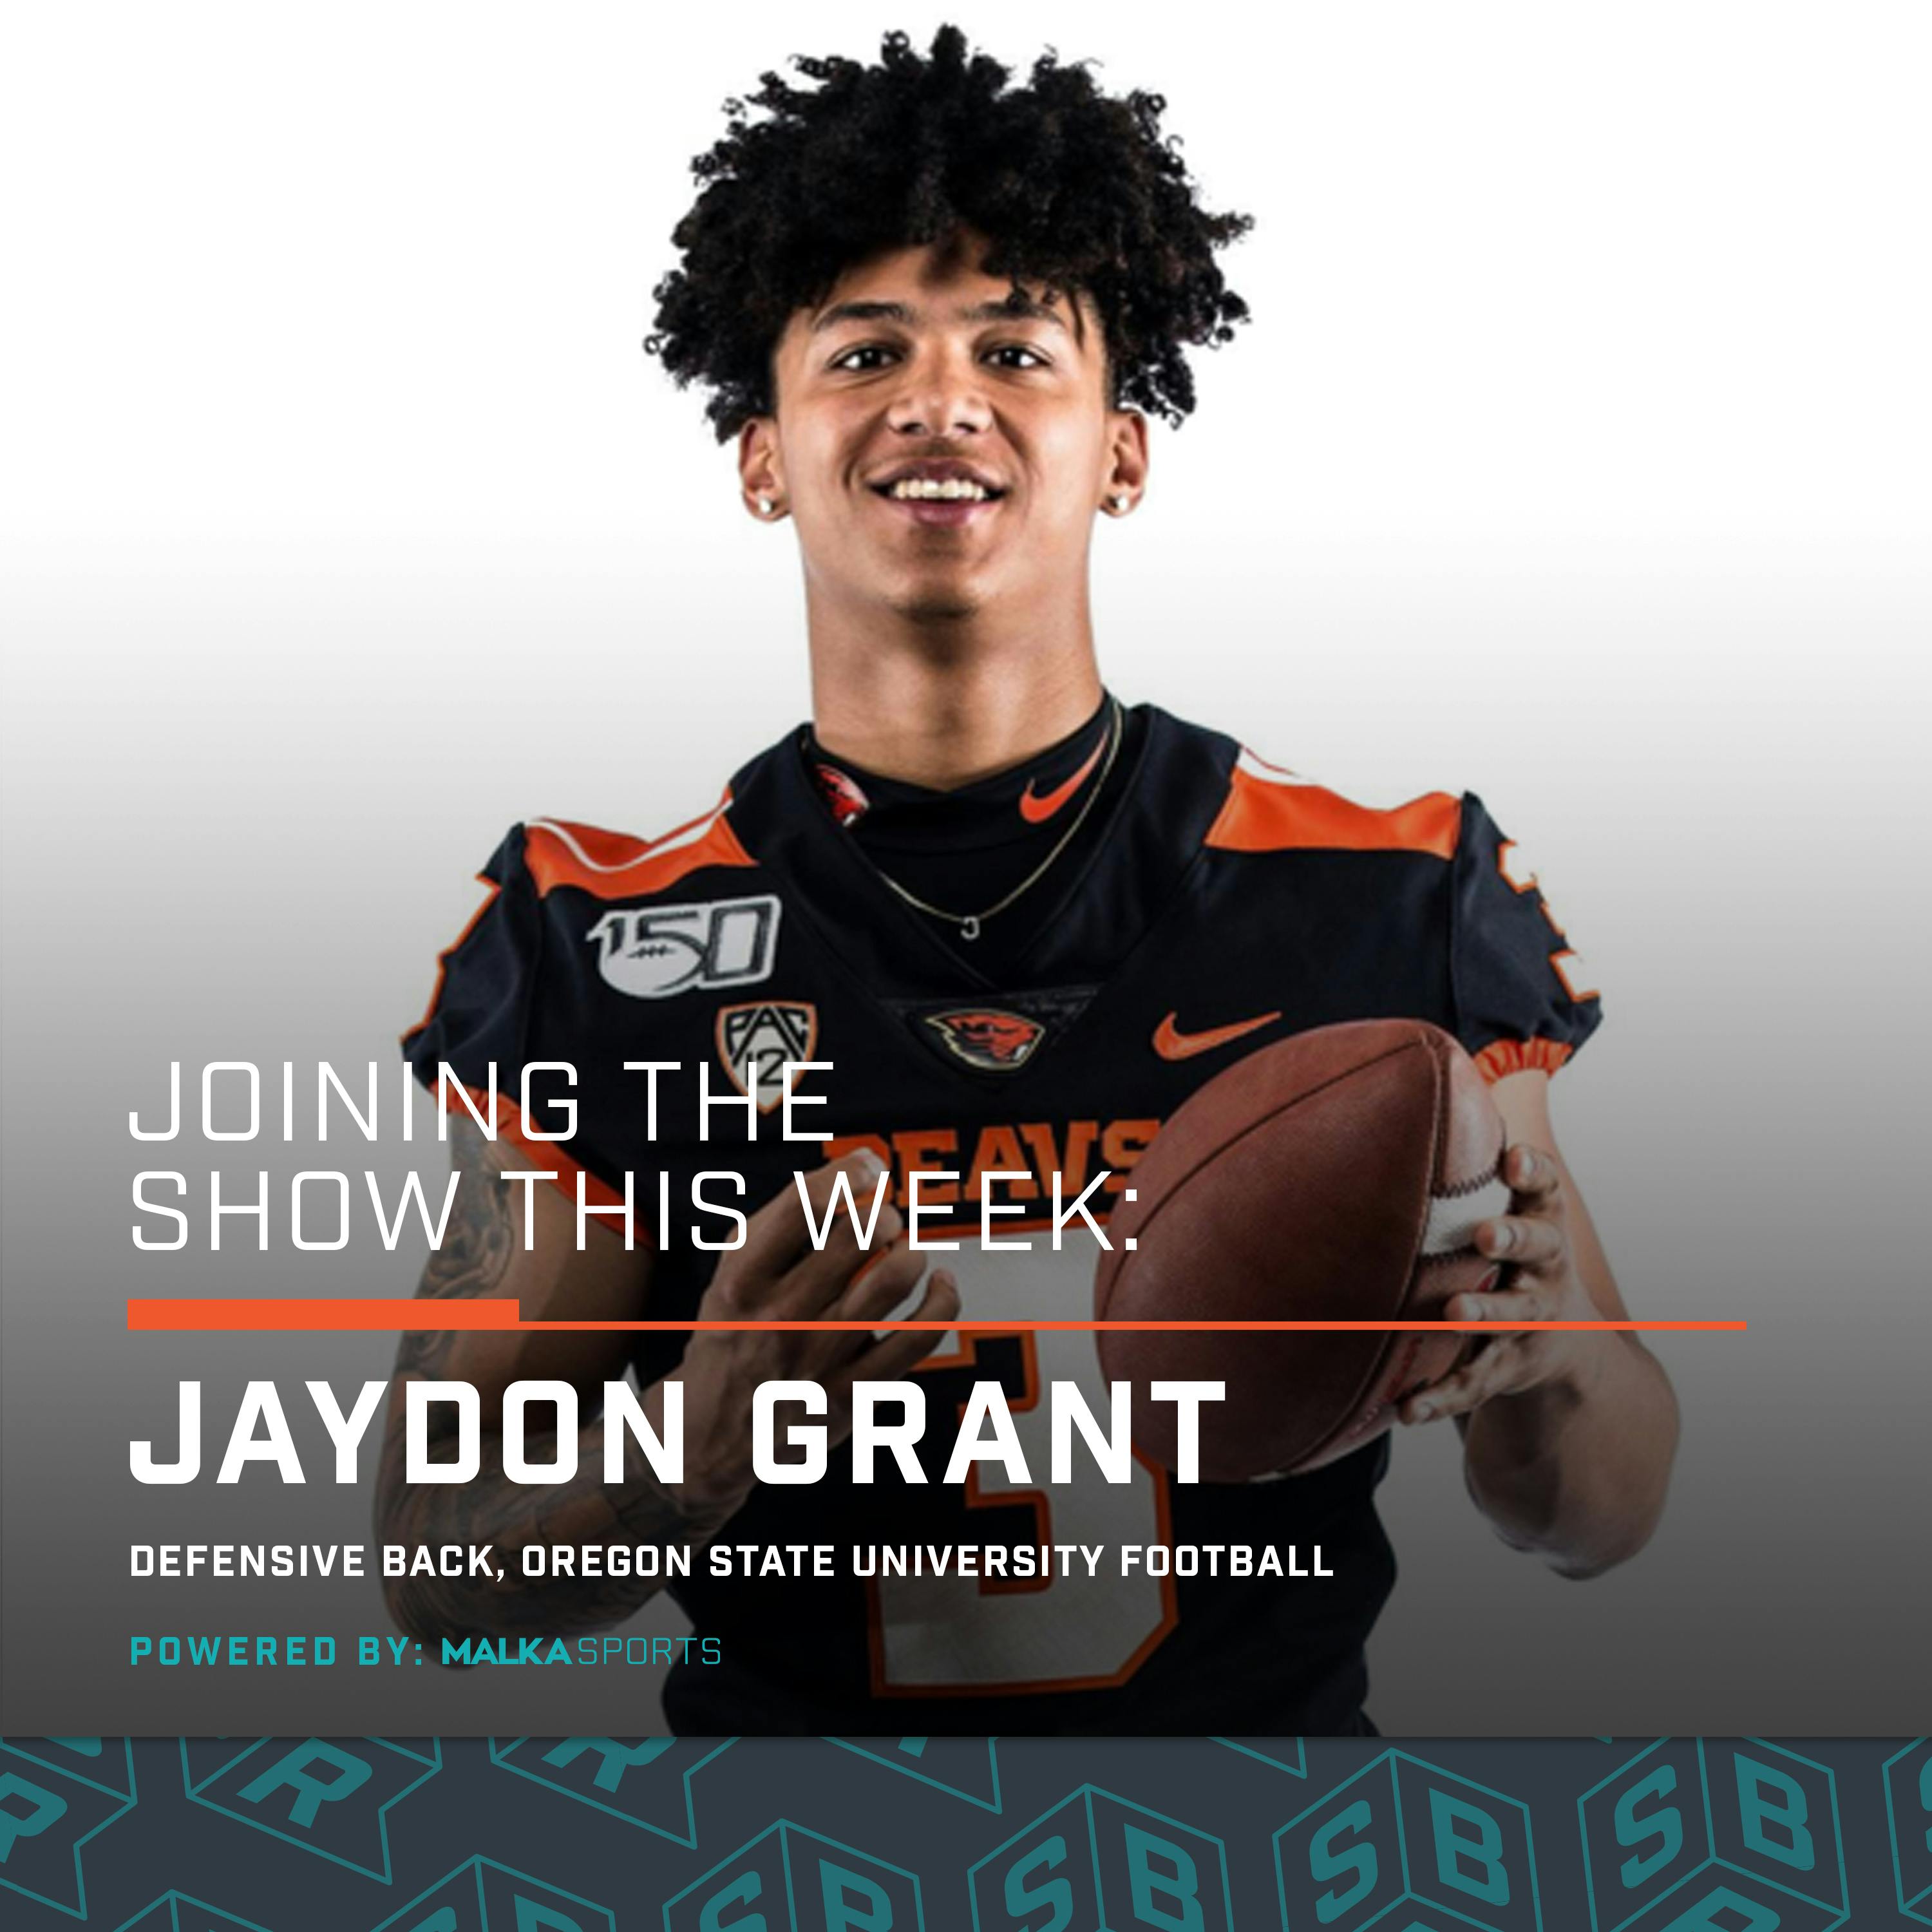 Jaydon Grant (@JaydonGrant) - Oregon State Football player